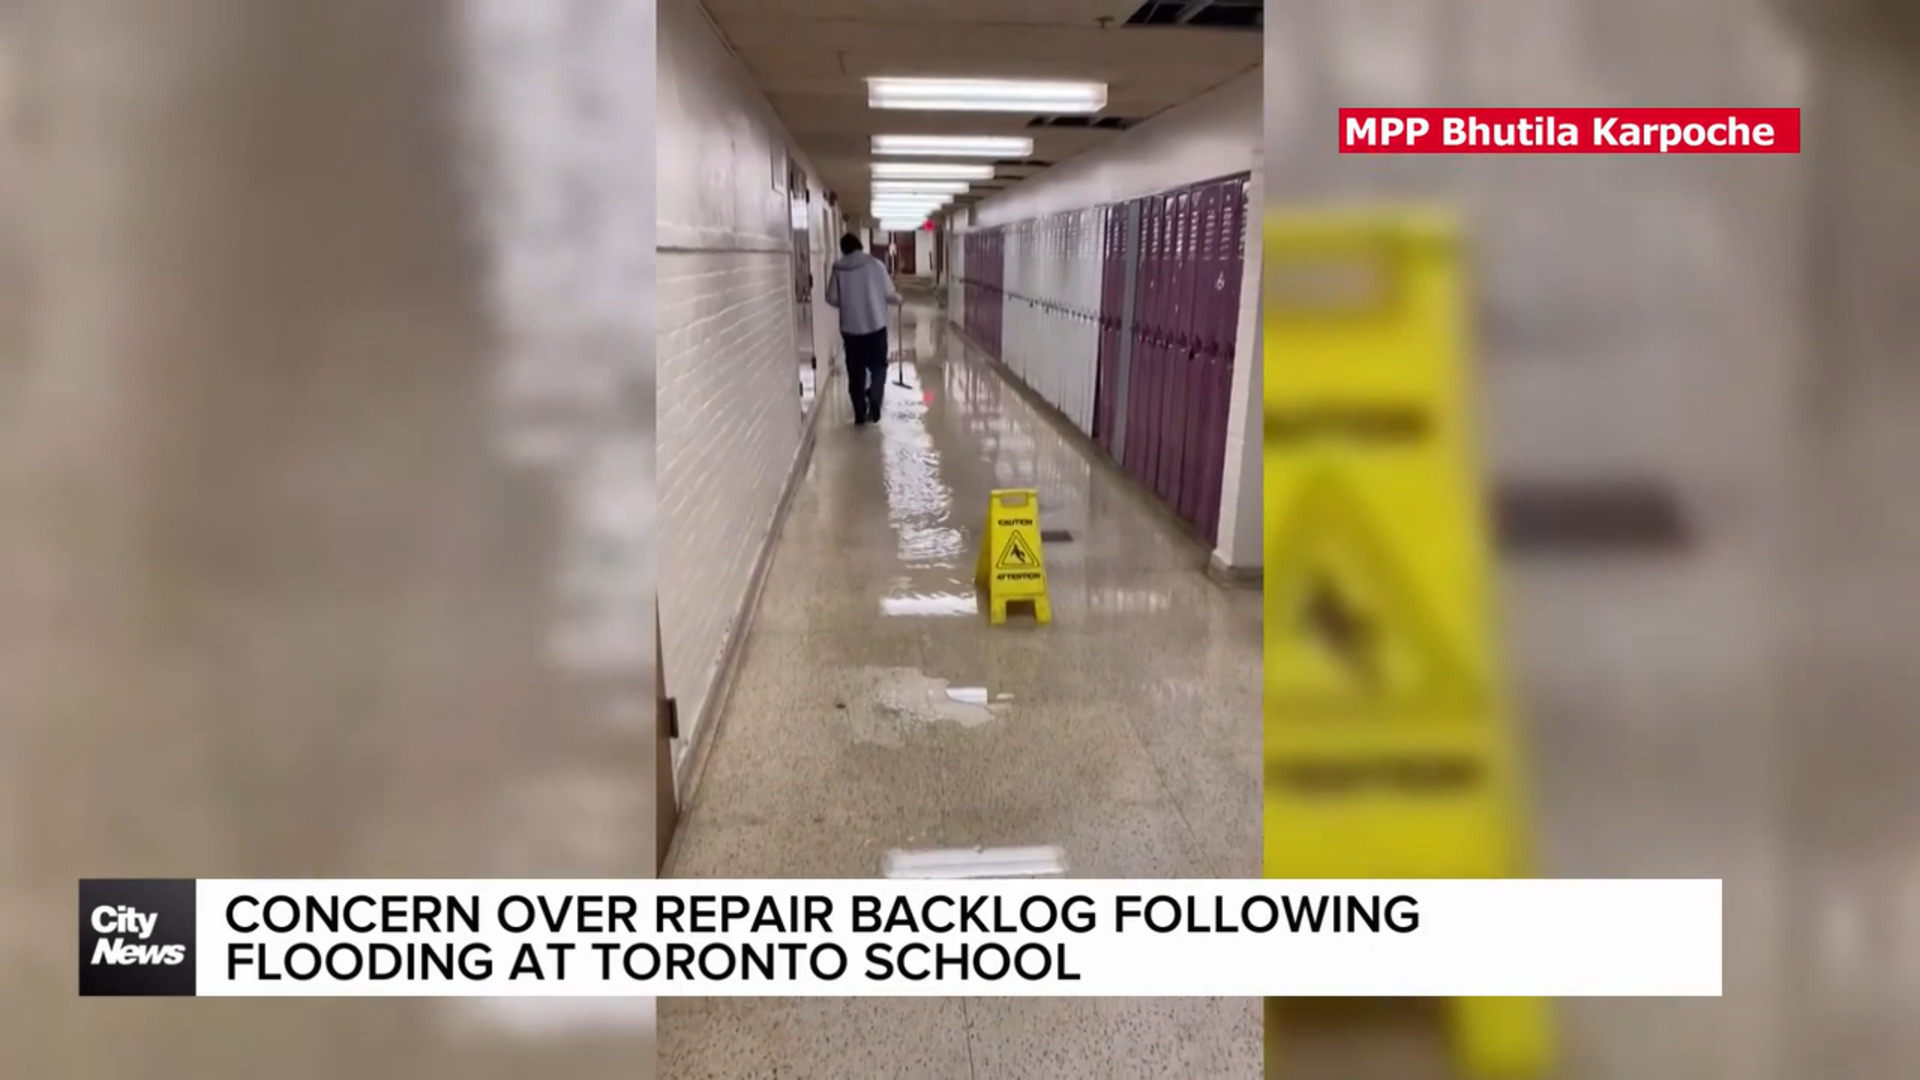 Flooding at Toronto school raises concern over province’s repair backlog